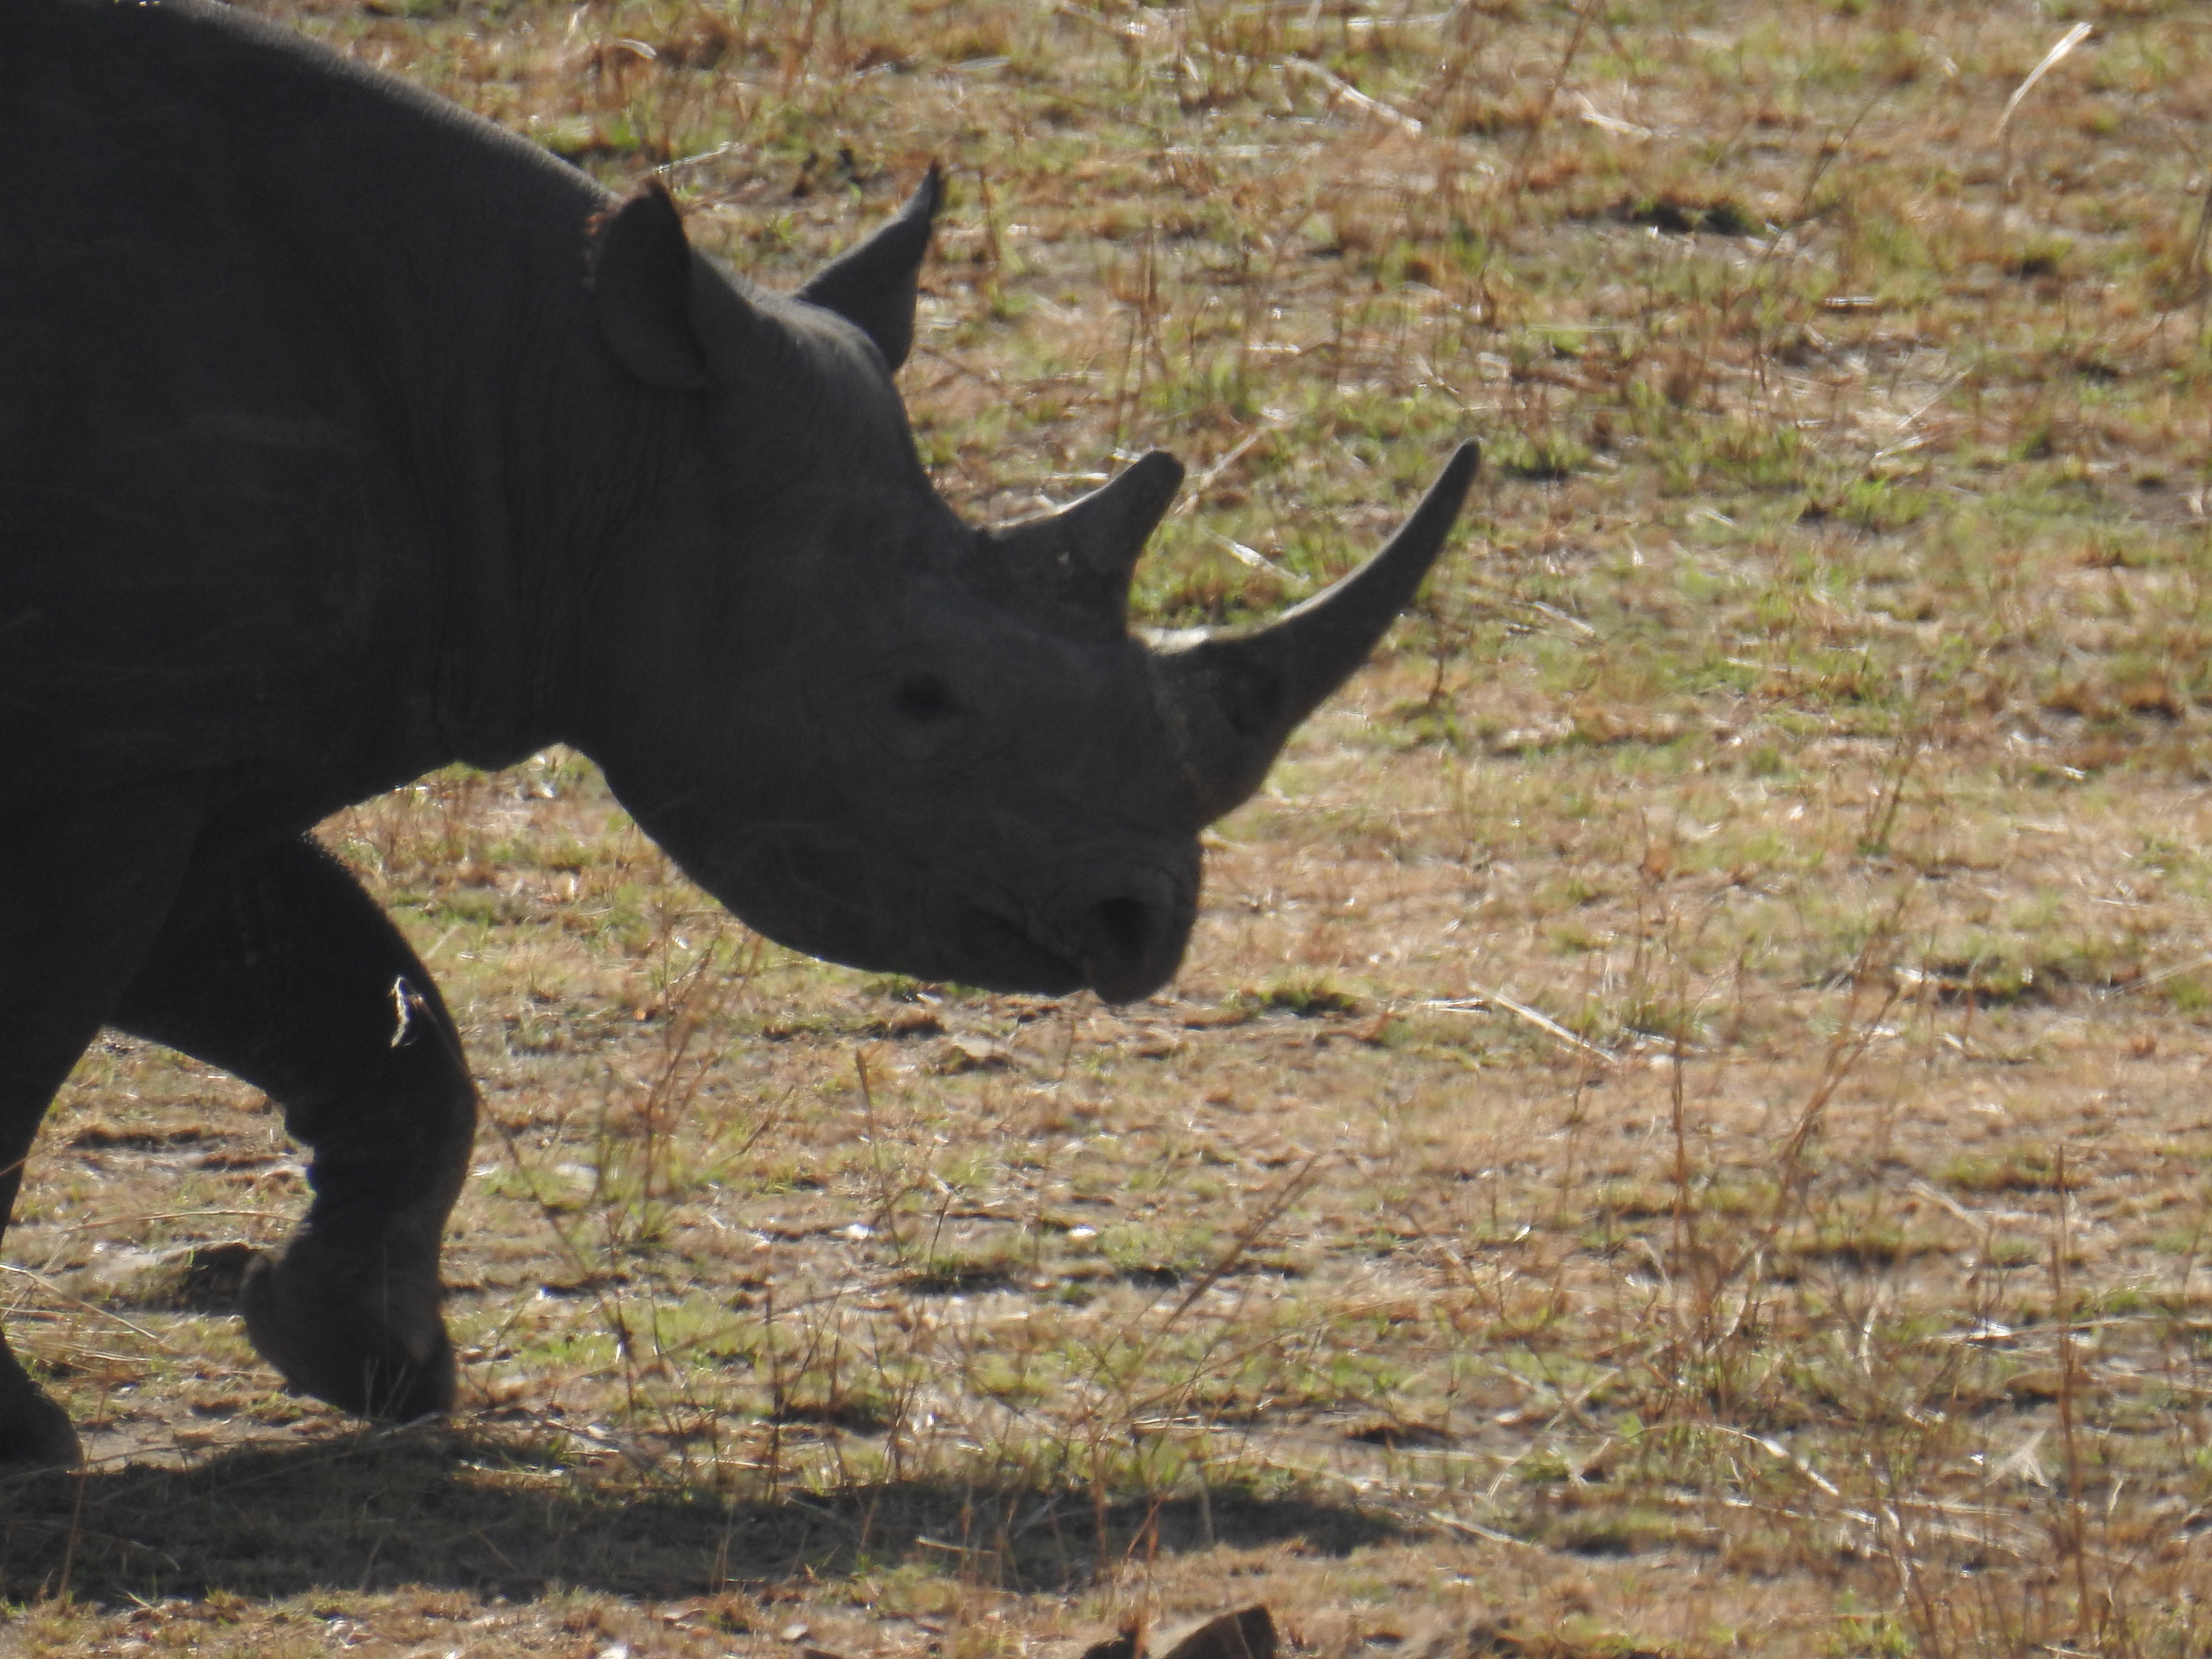 Rhino4.jpg